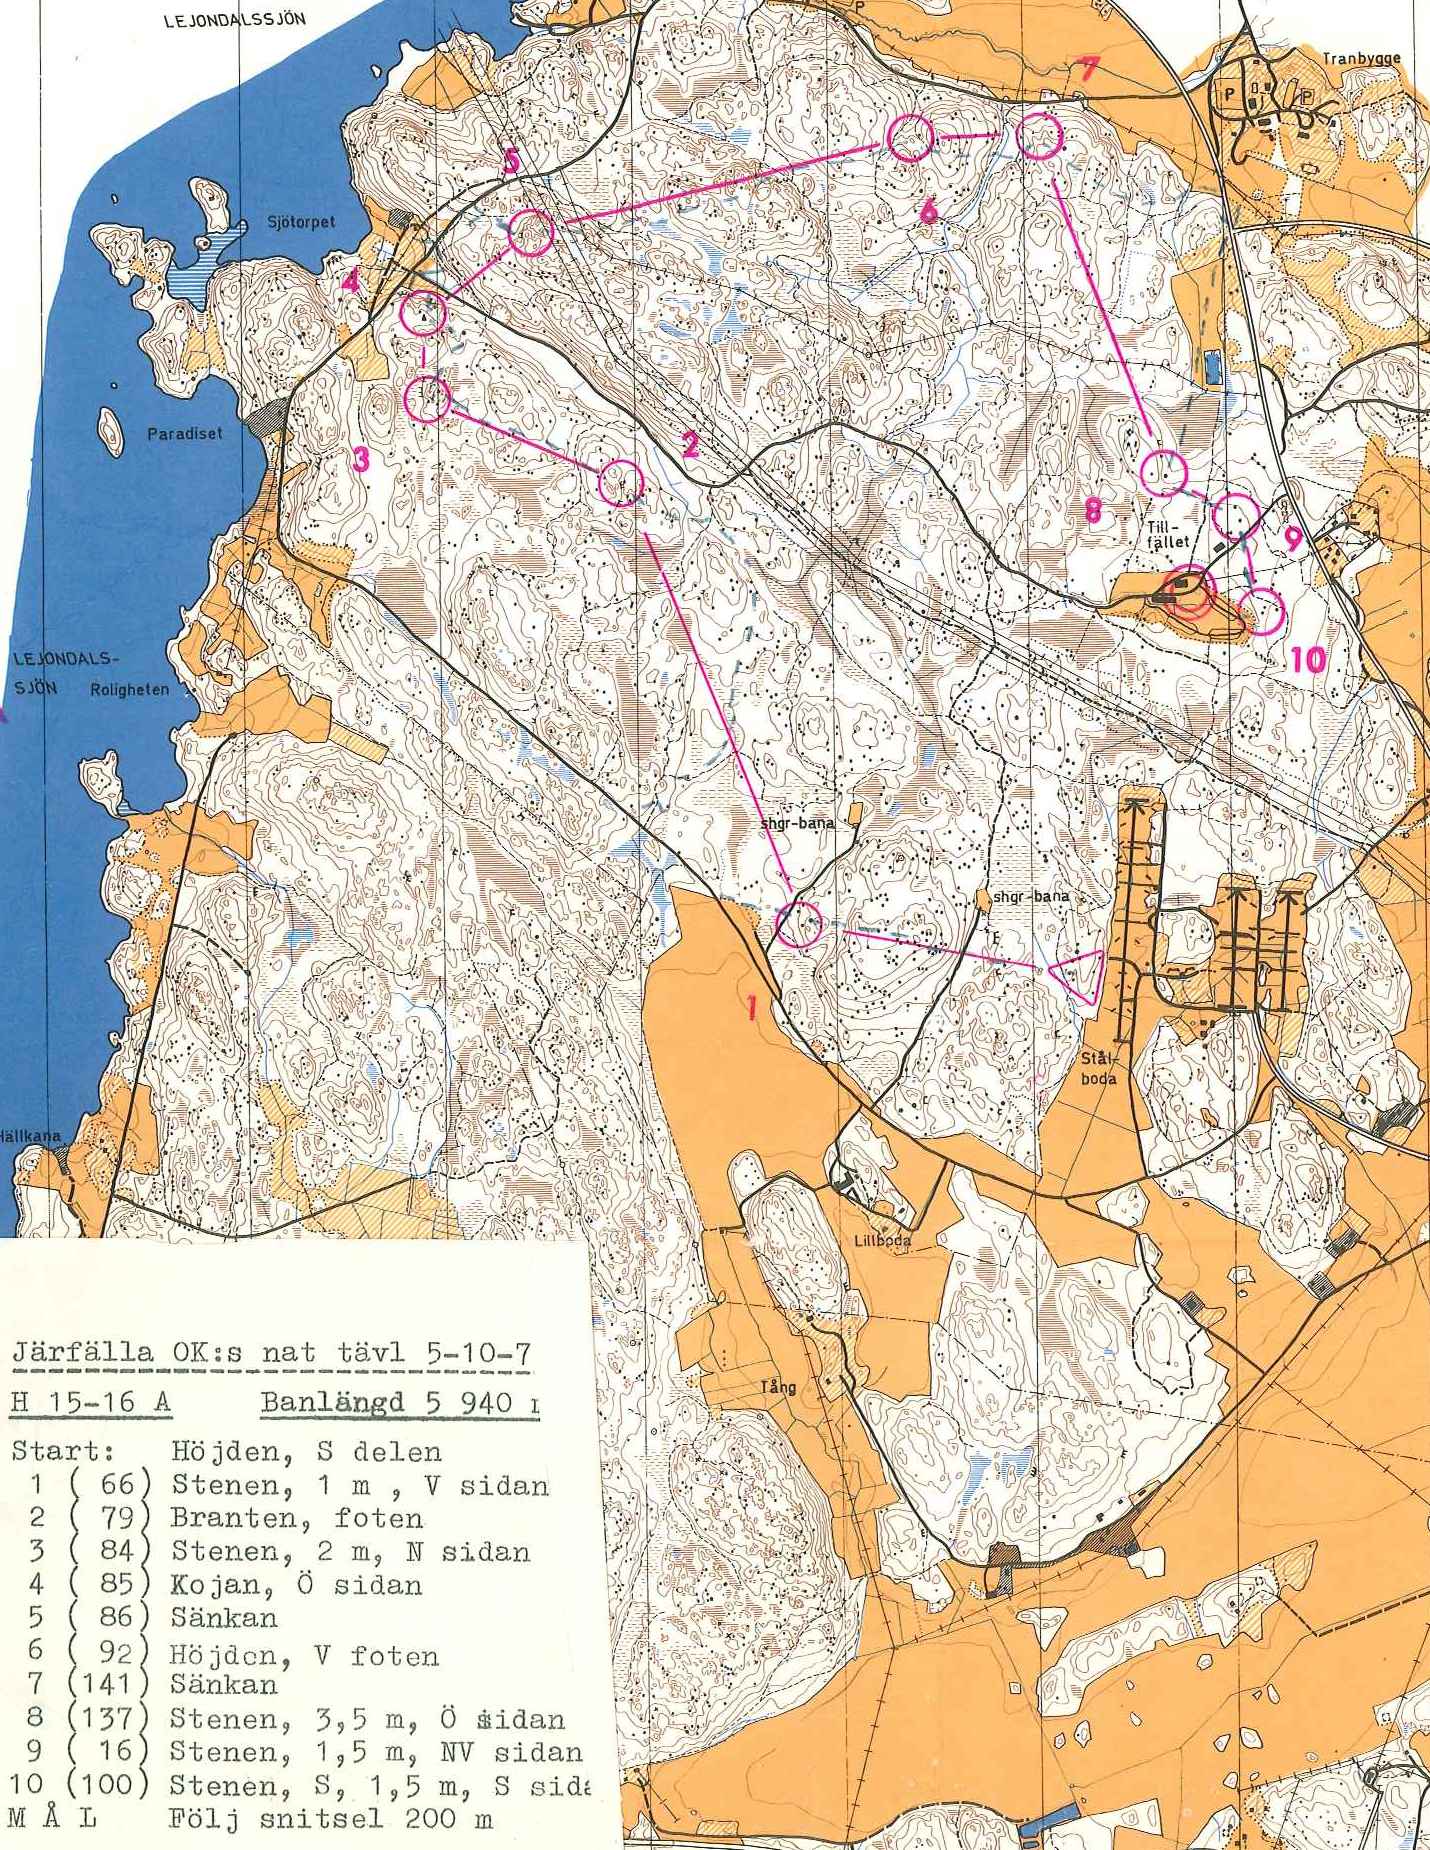 Järfälla (05.10.1975)